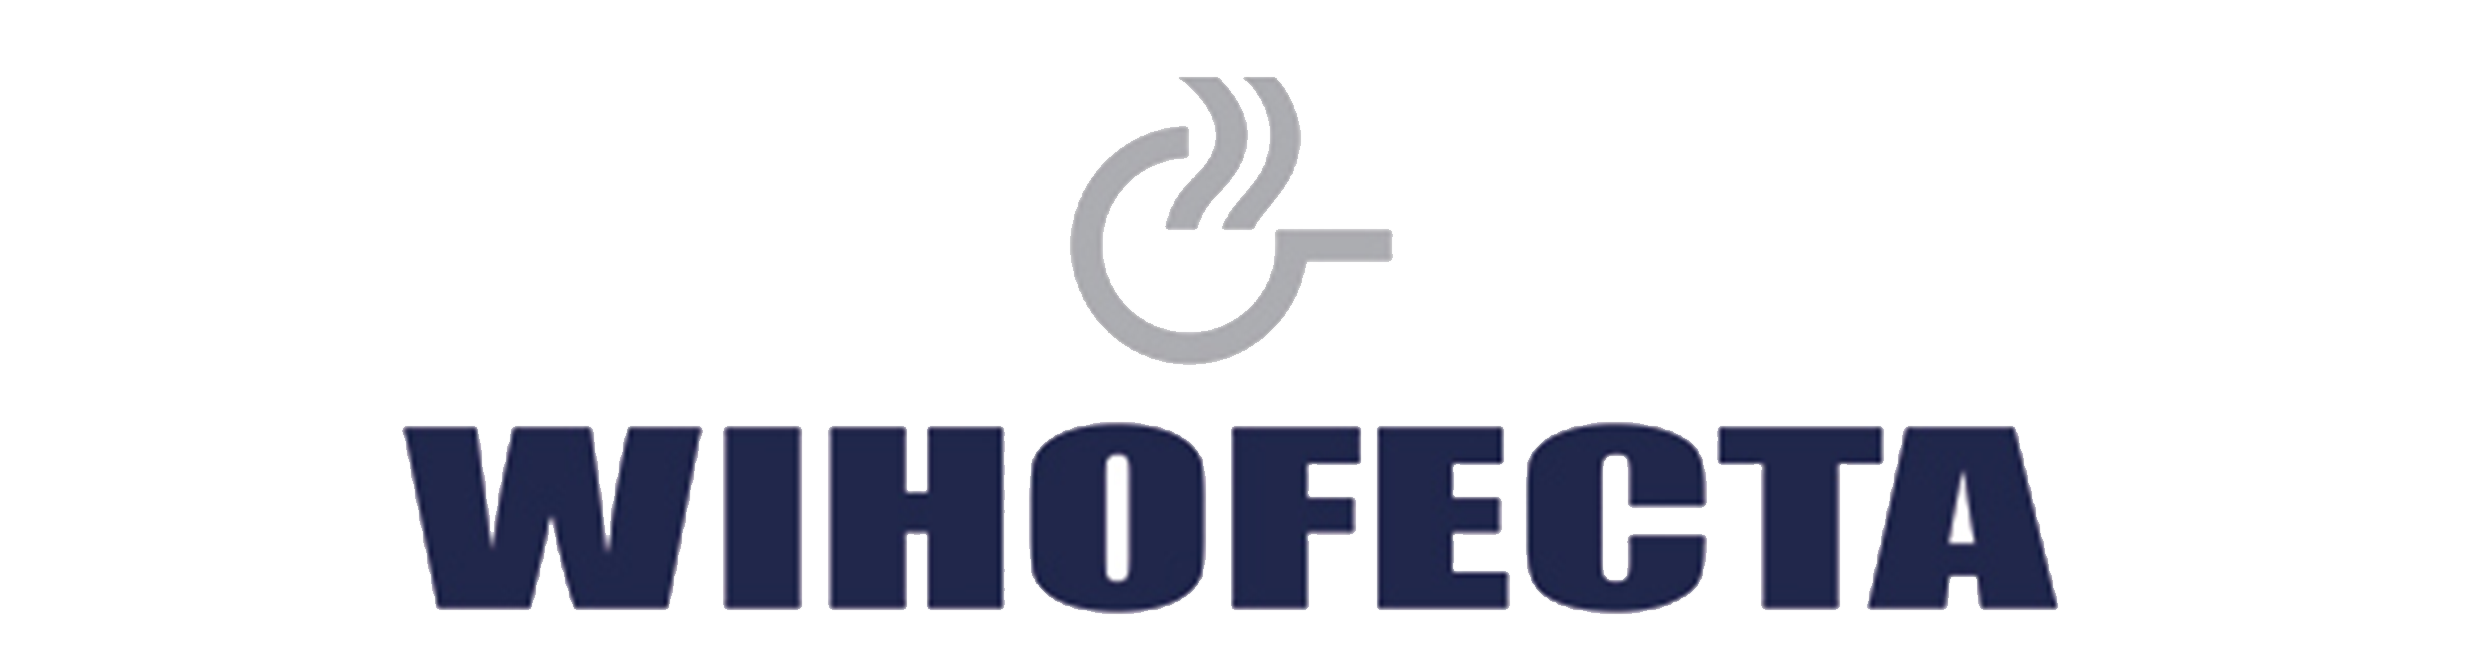 Wihofecta logo